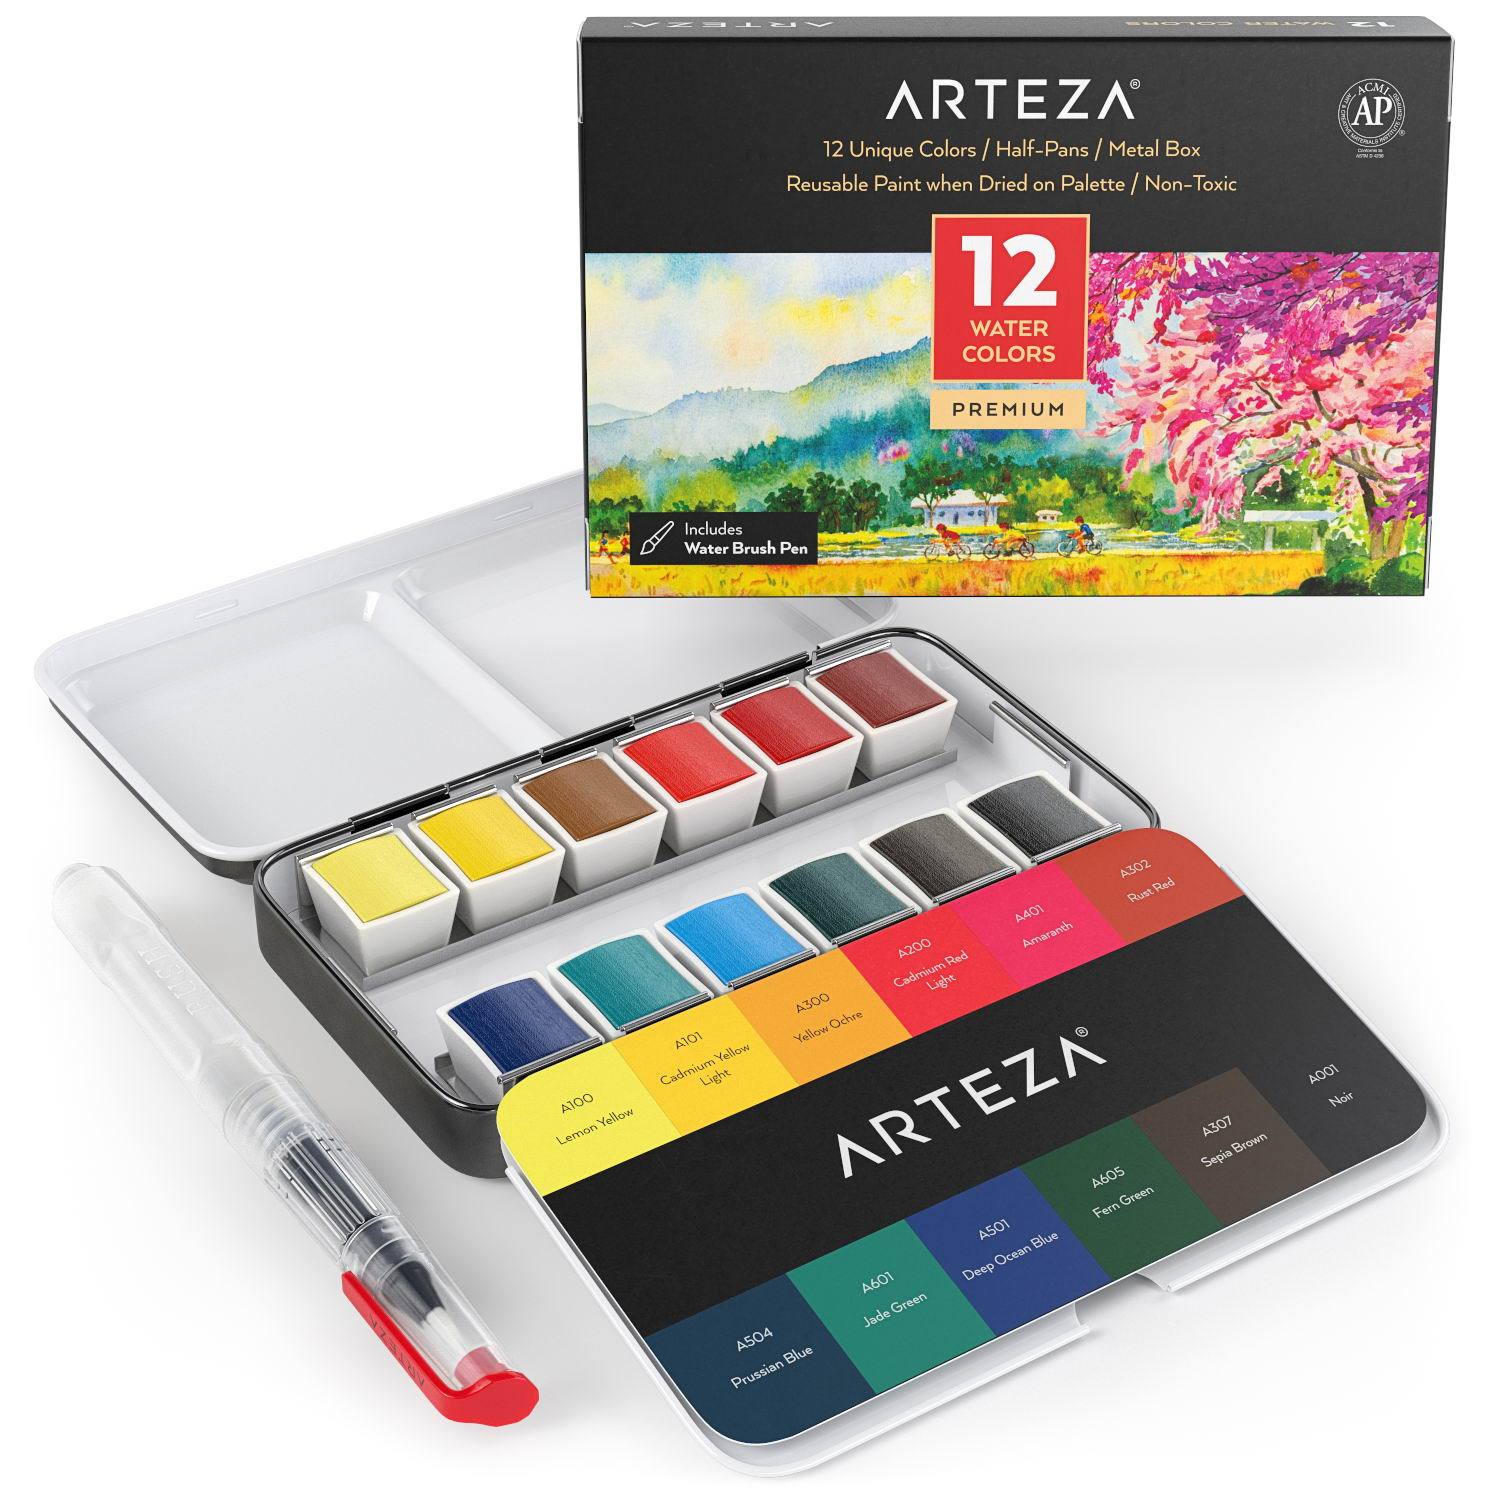 Arteza Iridescent Watercolor Paint Set, 12 Metallic Pearl Colors Half-Pans, Waterbrush Included, Reusable Semi-Moist Glitter Paint, Non-Toxic, Art